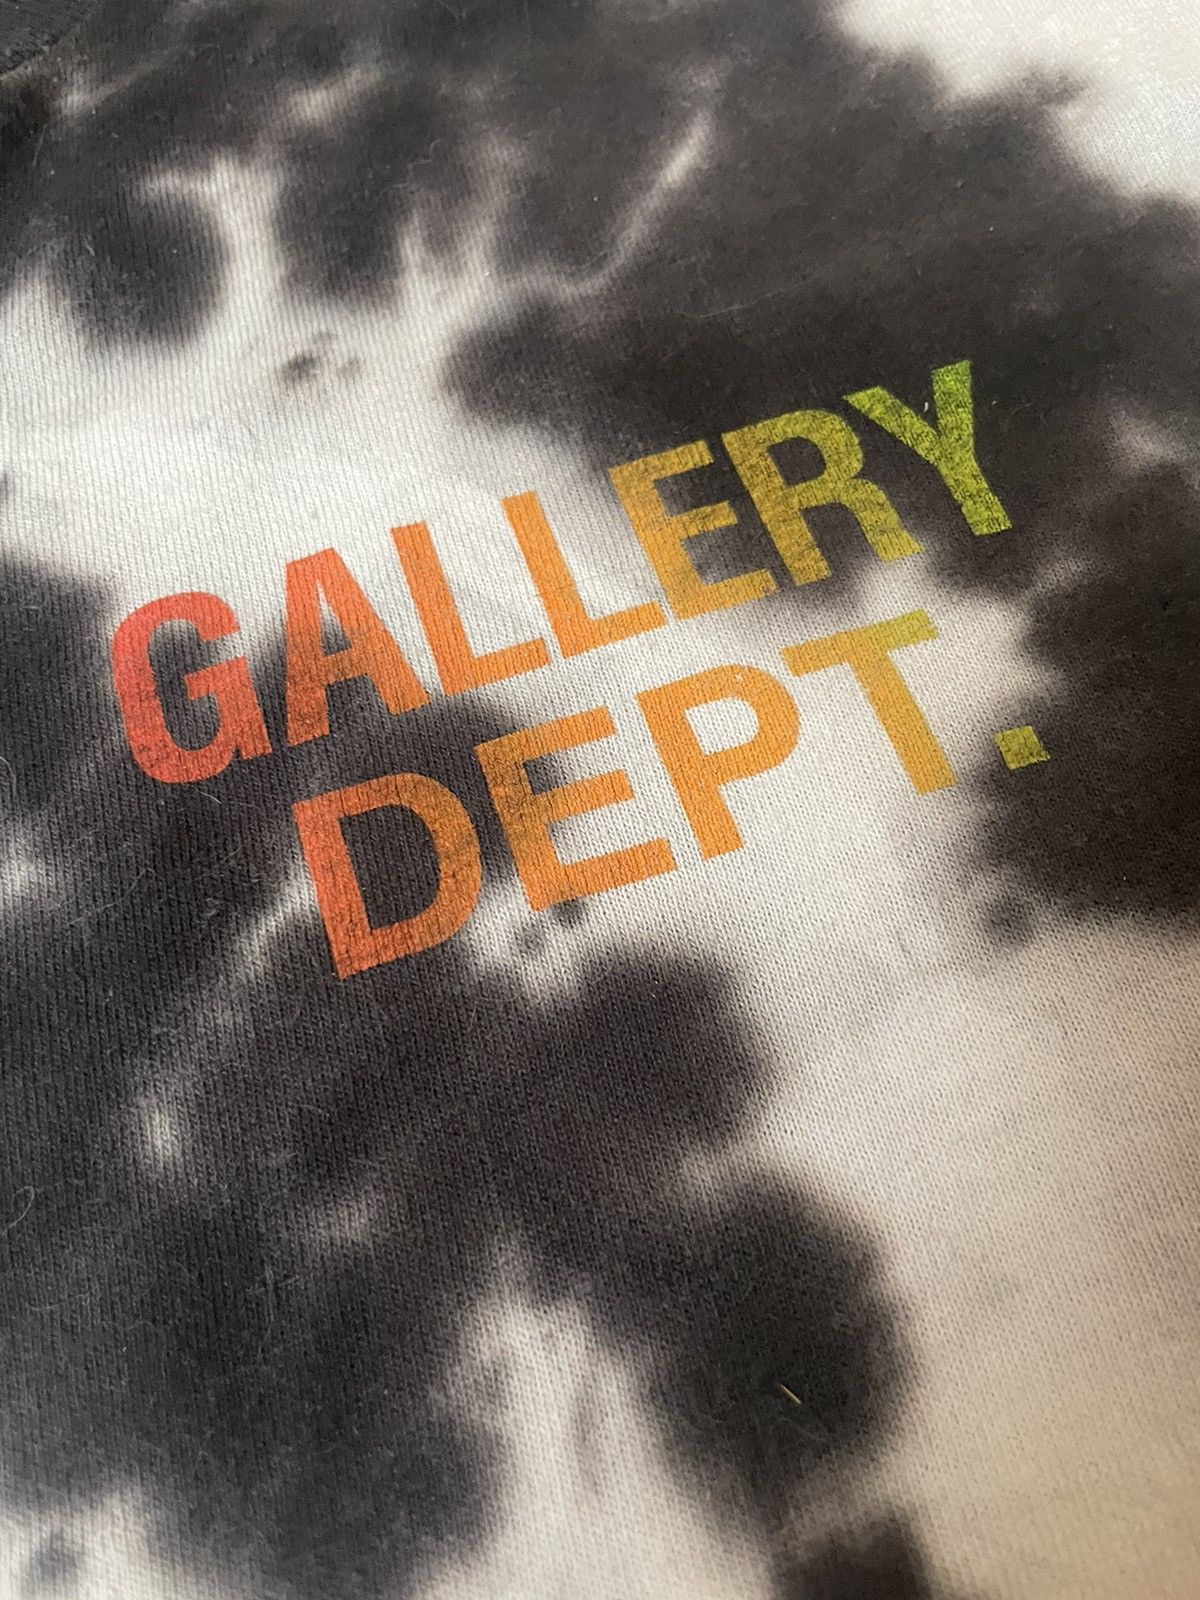 Gallery Dept. Gallery Dept Peace Tie Dye Logo T-Shirt Size US M / EU 48-50 / 2 - 2 Preview